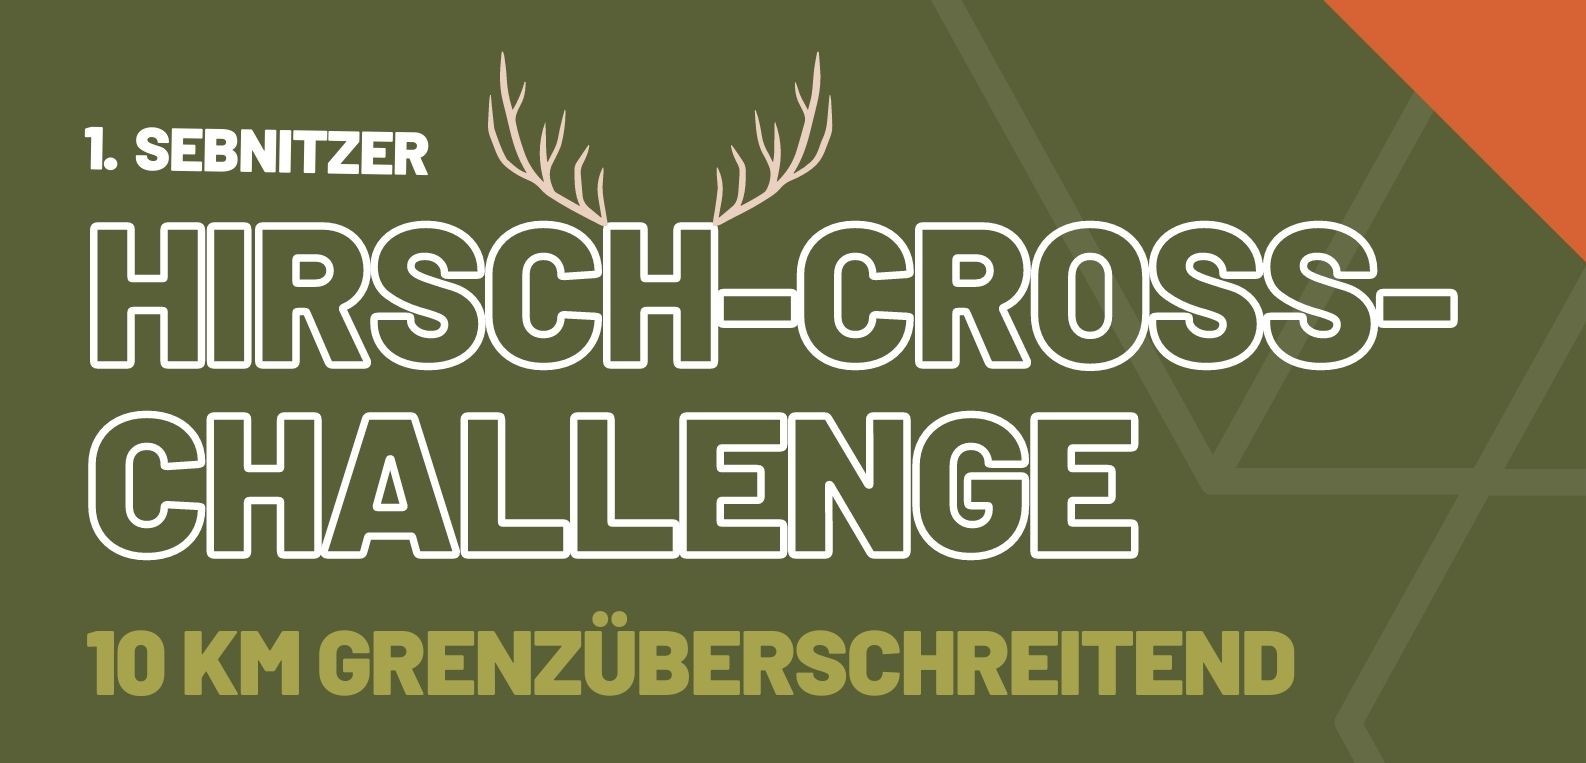 Hirsch-Cross-Challenge